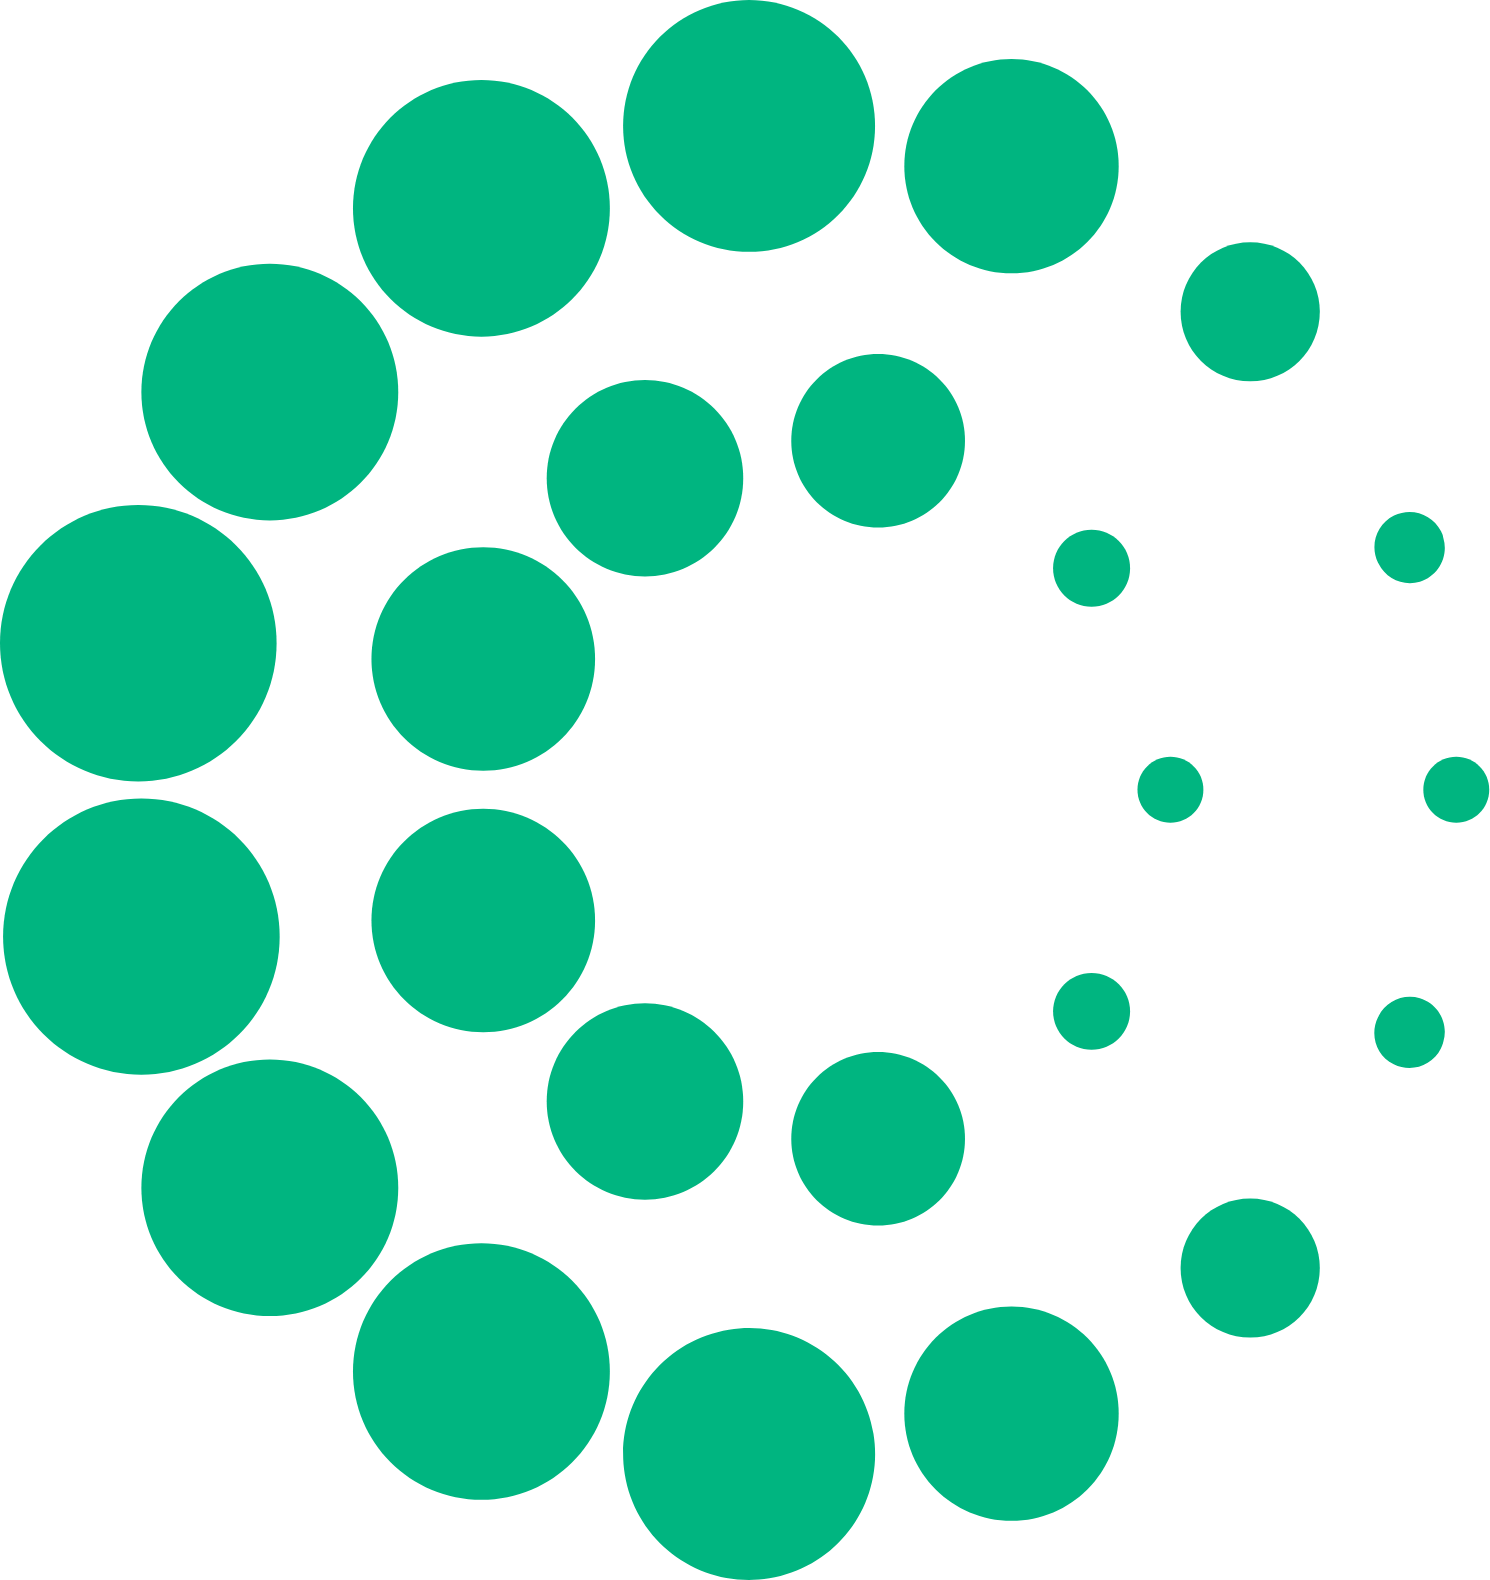 Aker Carbon Capture logo (transparent PNG)